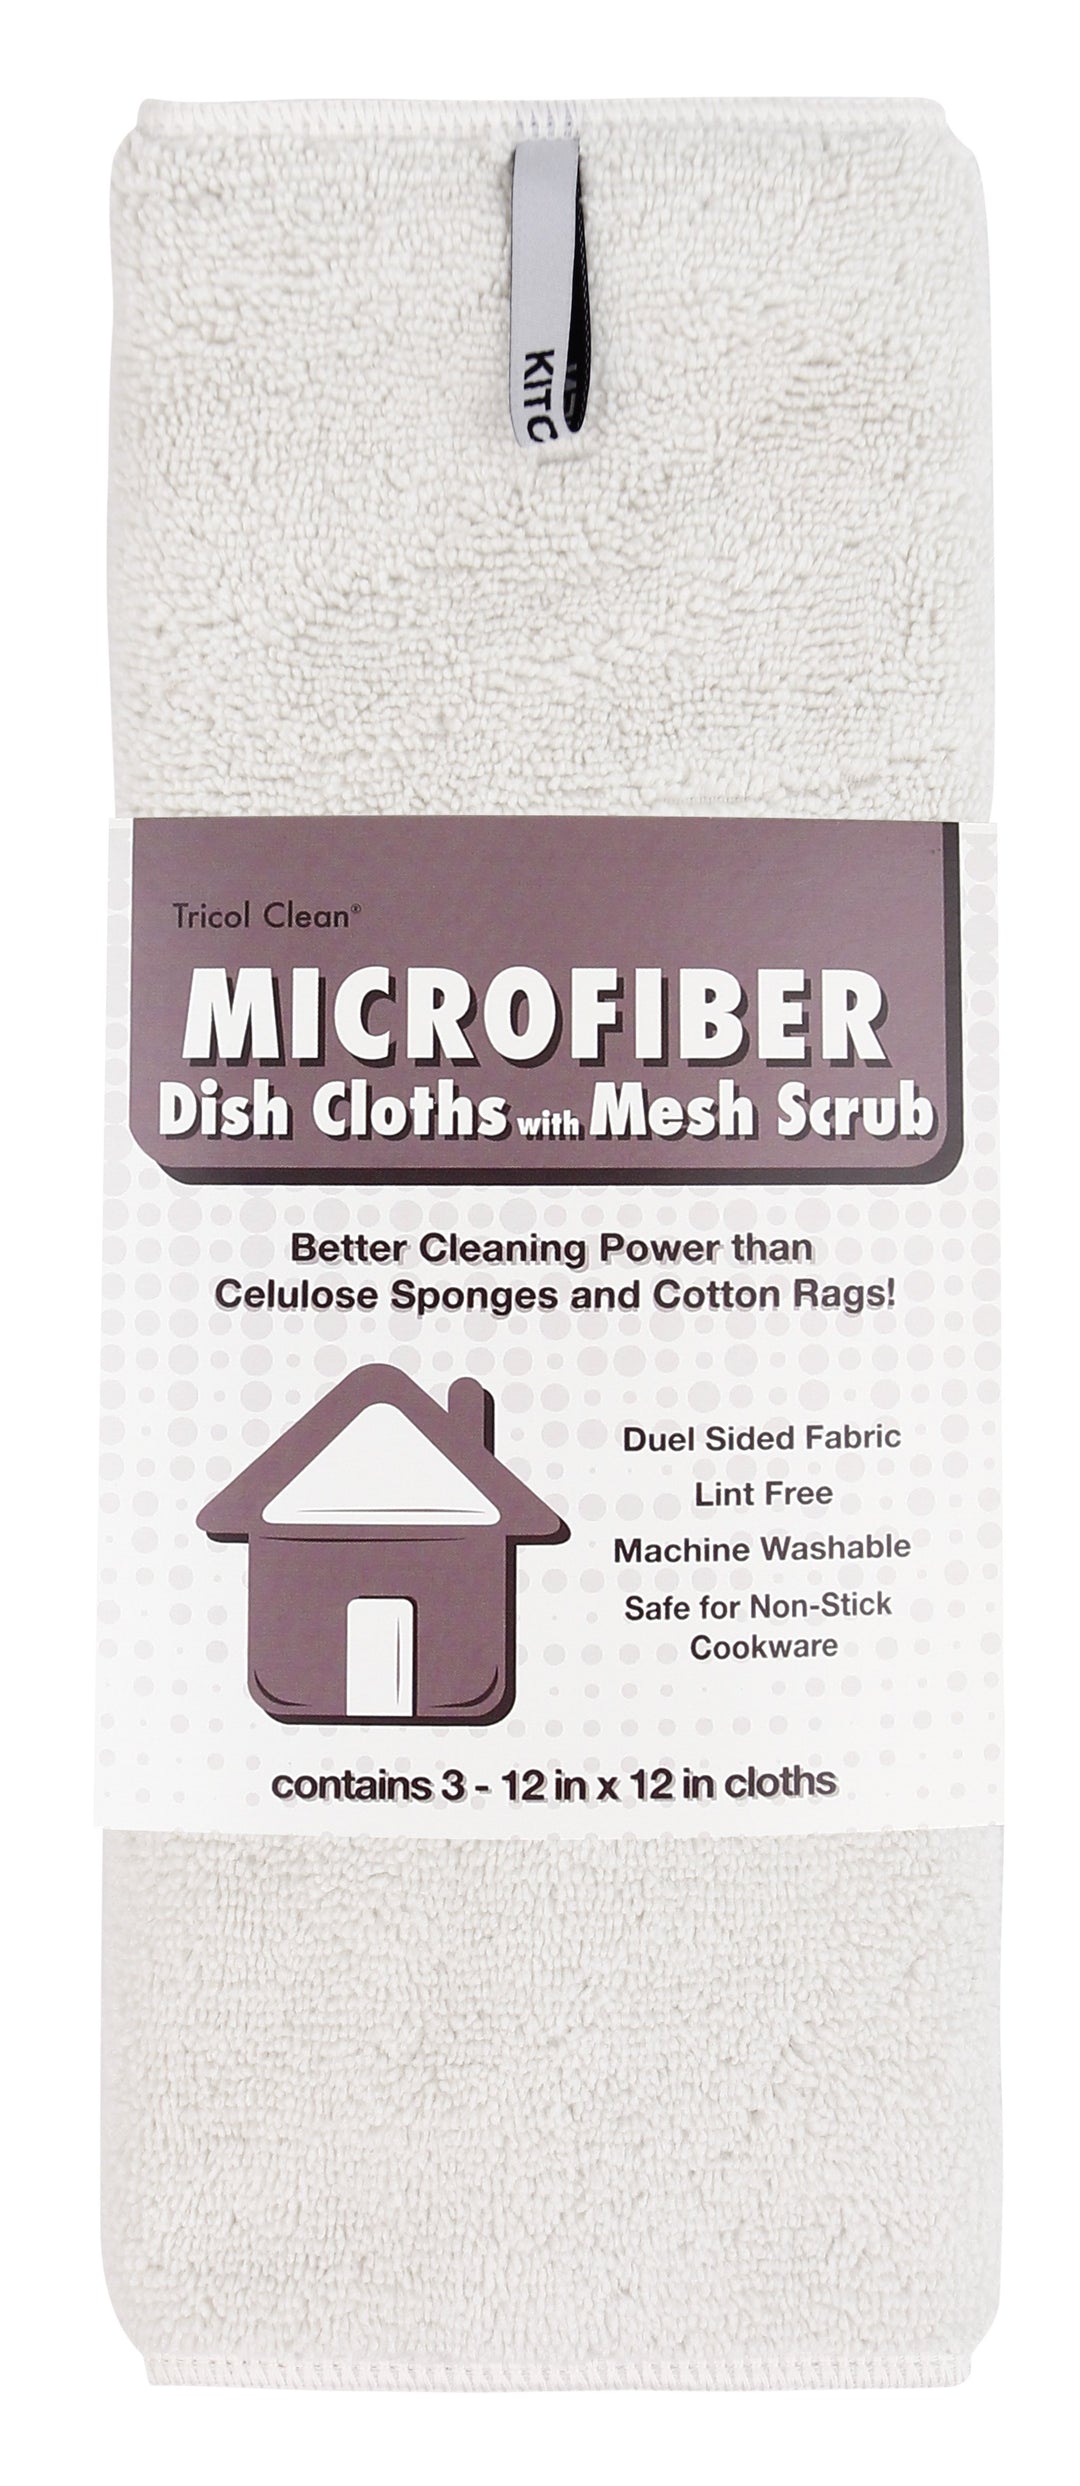 Dishwashing Cloth 3-Pack